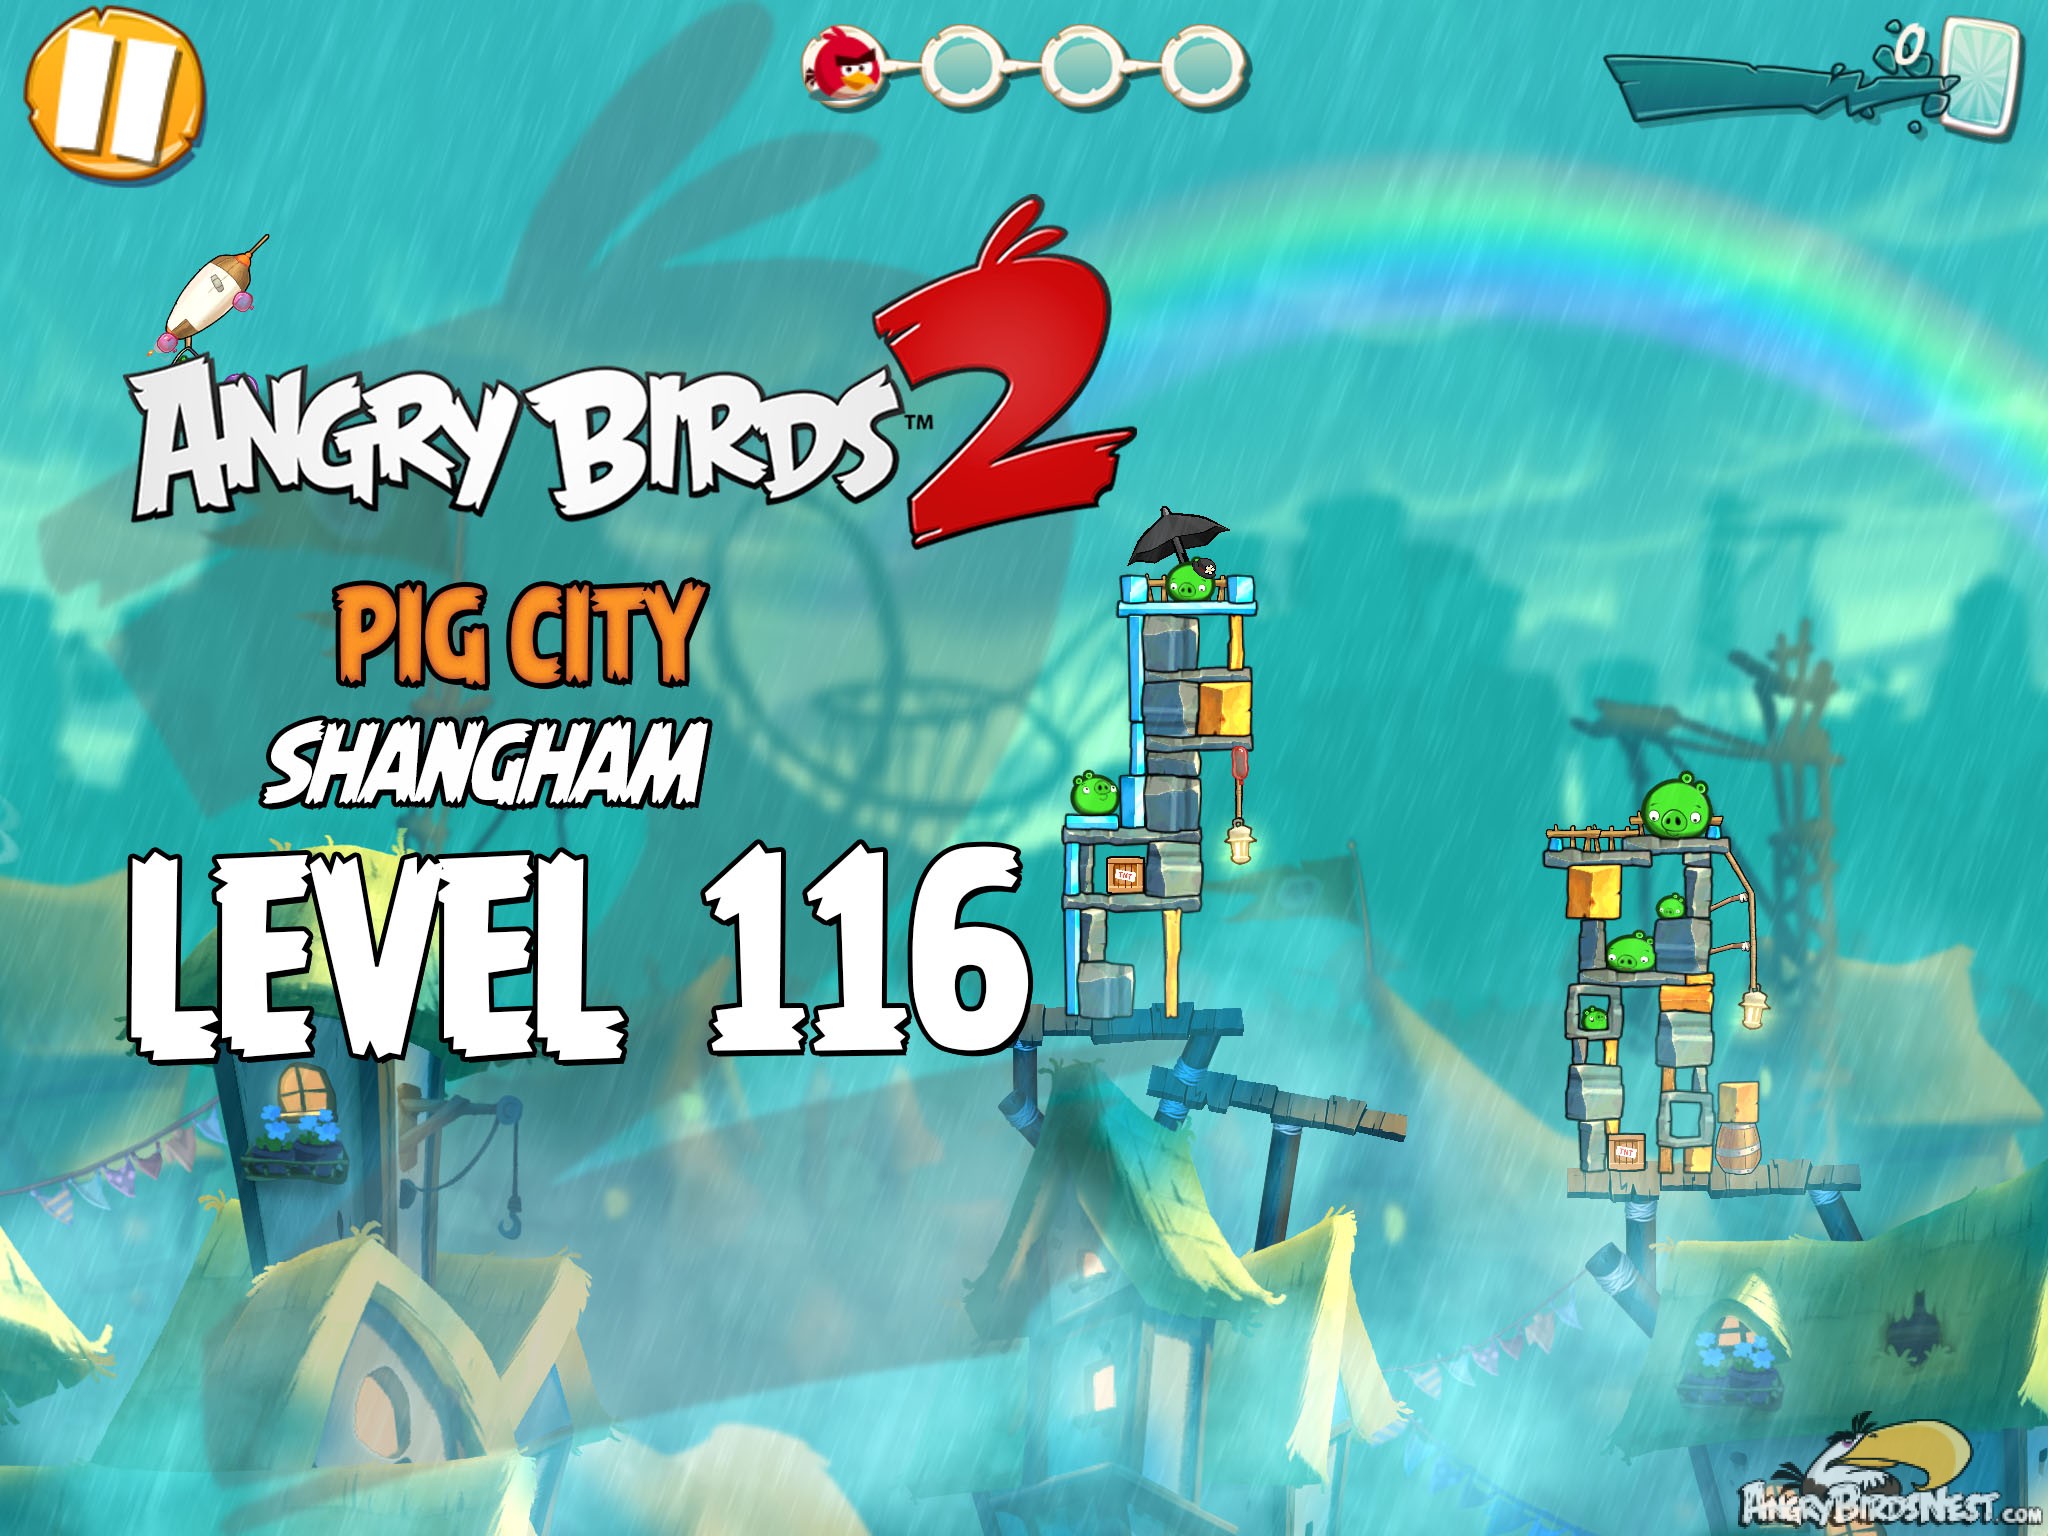 Angry Birds 2 Pig City Shangham Level 116